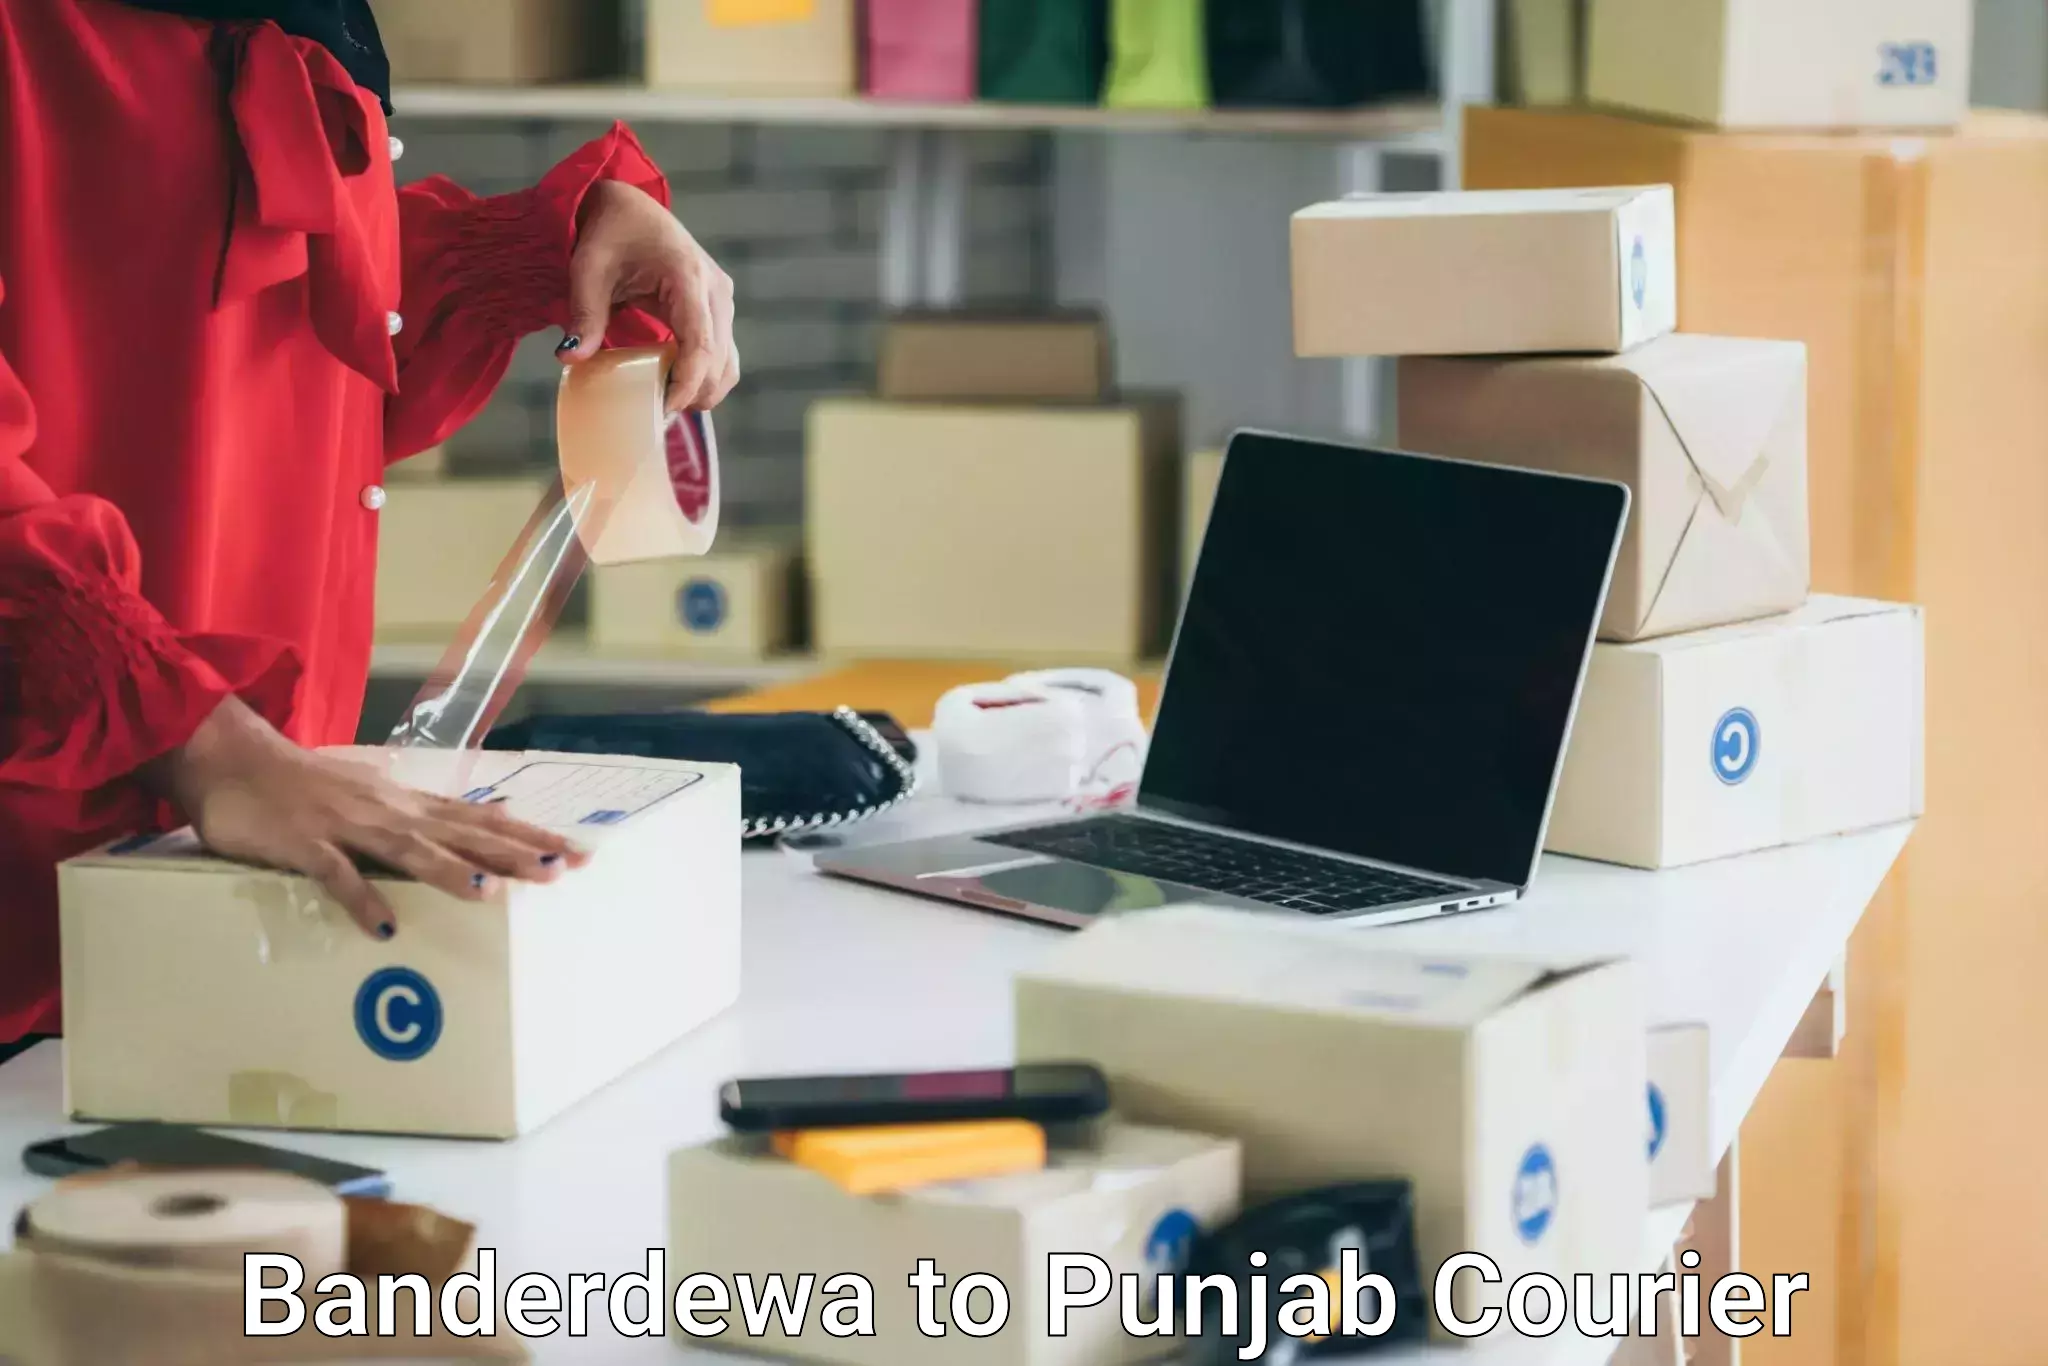 Furniture transport solutions Banderdewa to Punjab